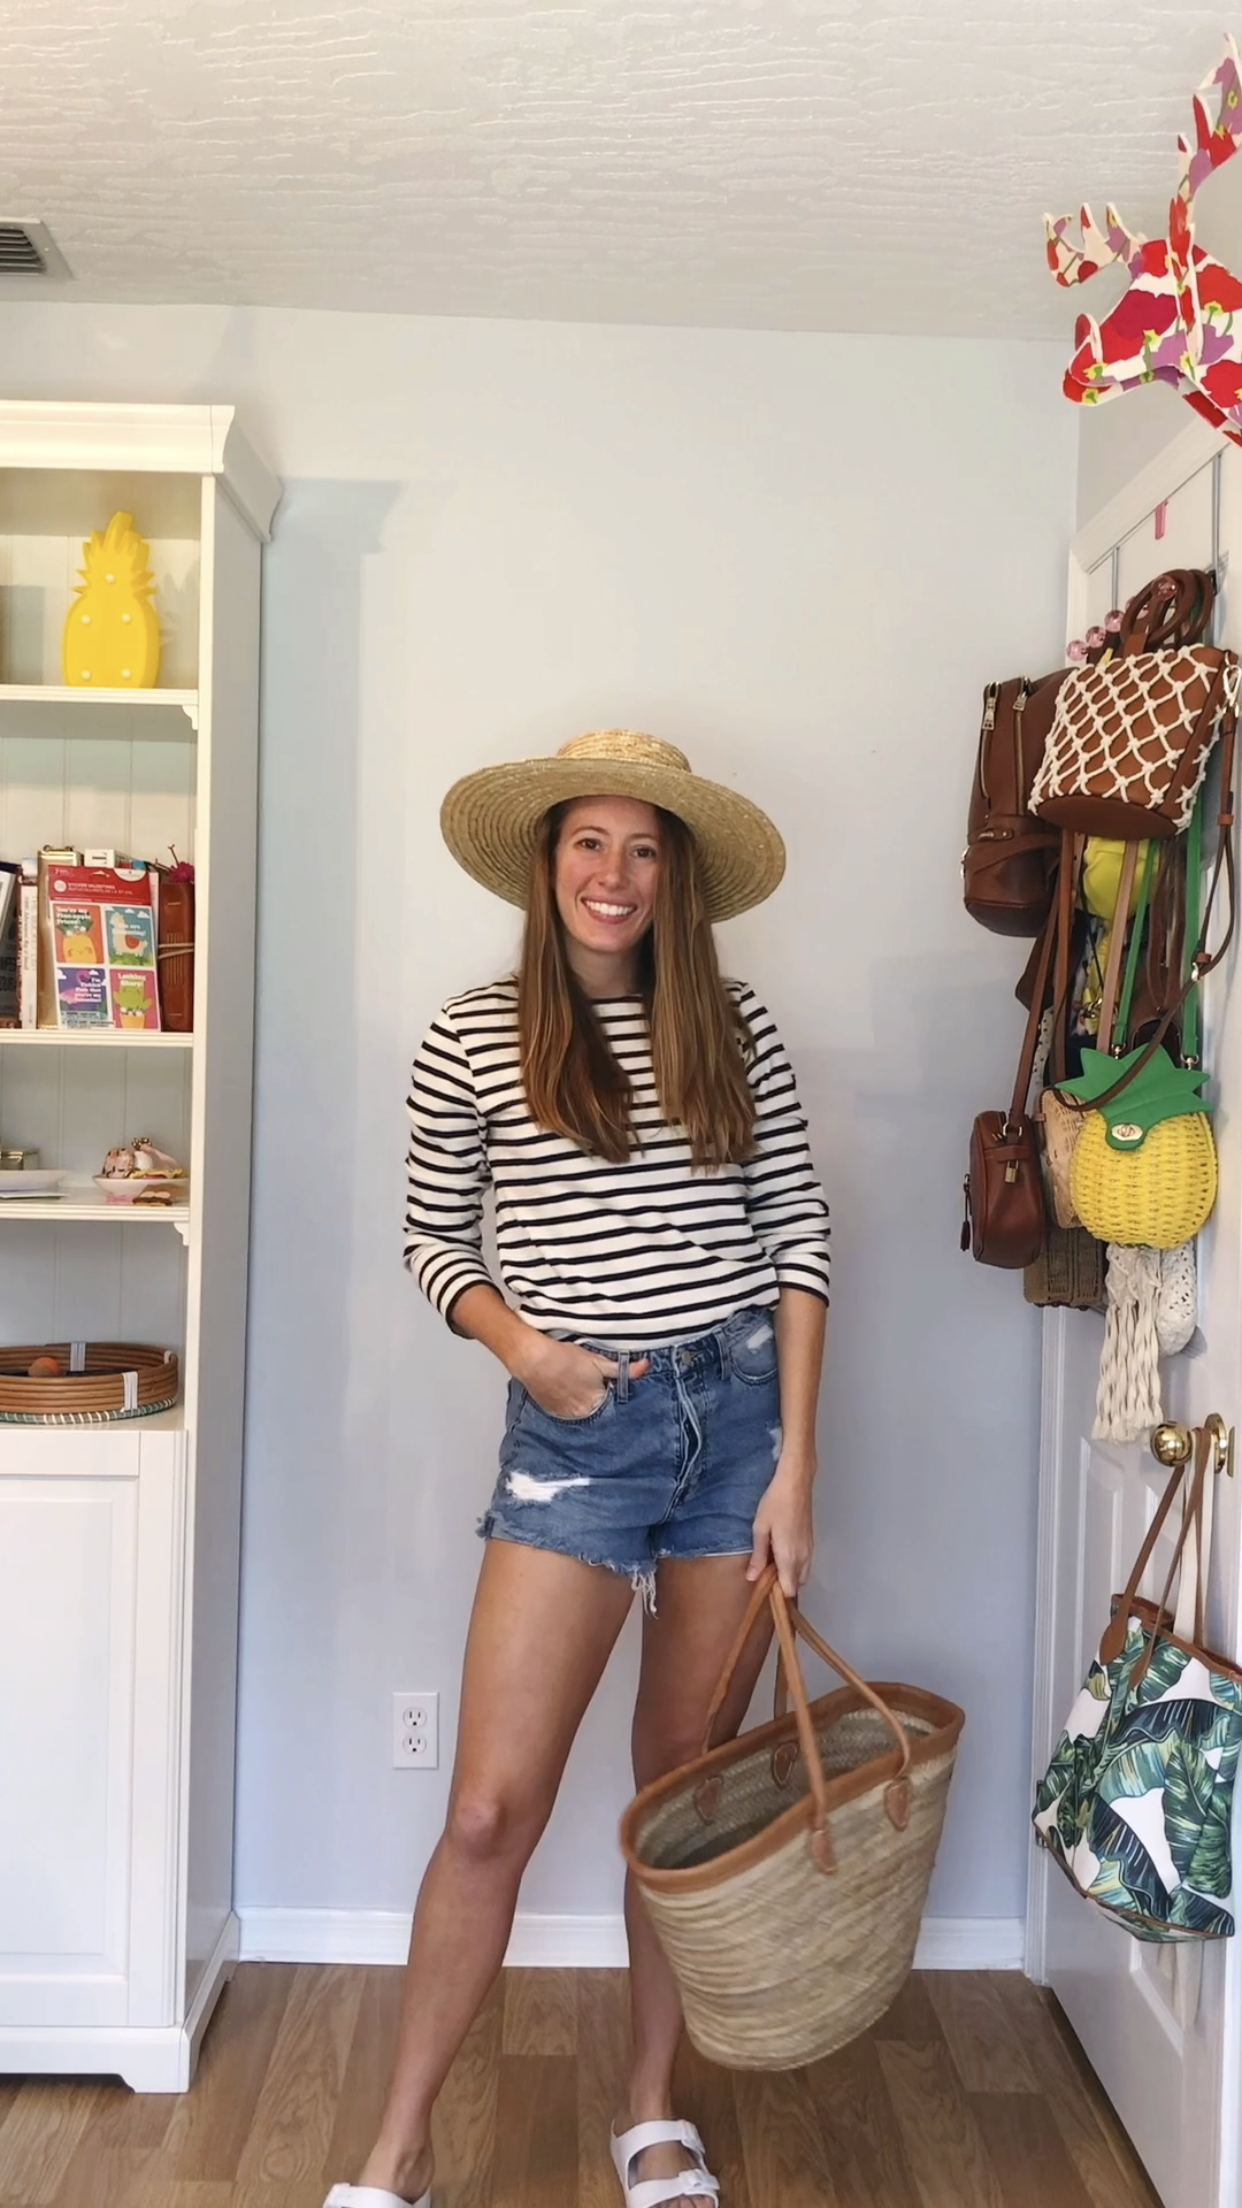 3 Ways to Wear a Long Sleeve Striped Shirt / Beach Outfit / Denim Shorts / Cutoff Shorts / Striped Top / Beach Bag / Rattan Accessories / Sunshine Style - A Florida Fashion Blog by Katie